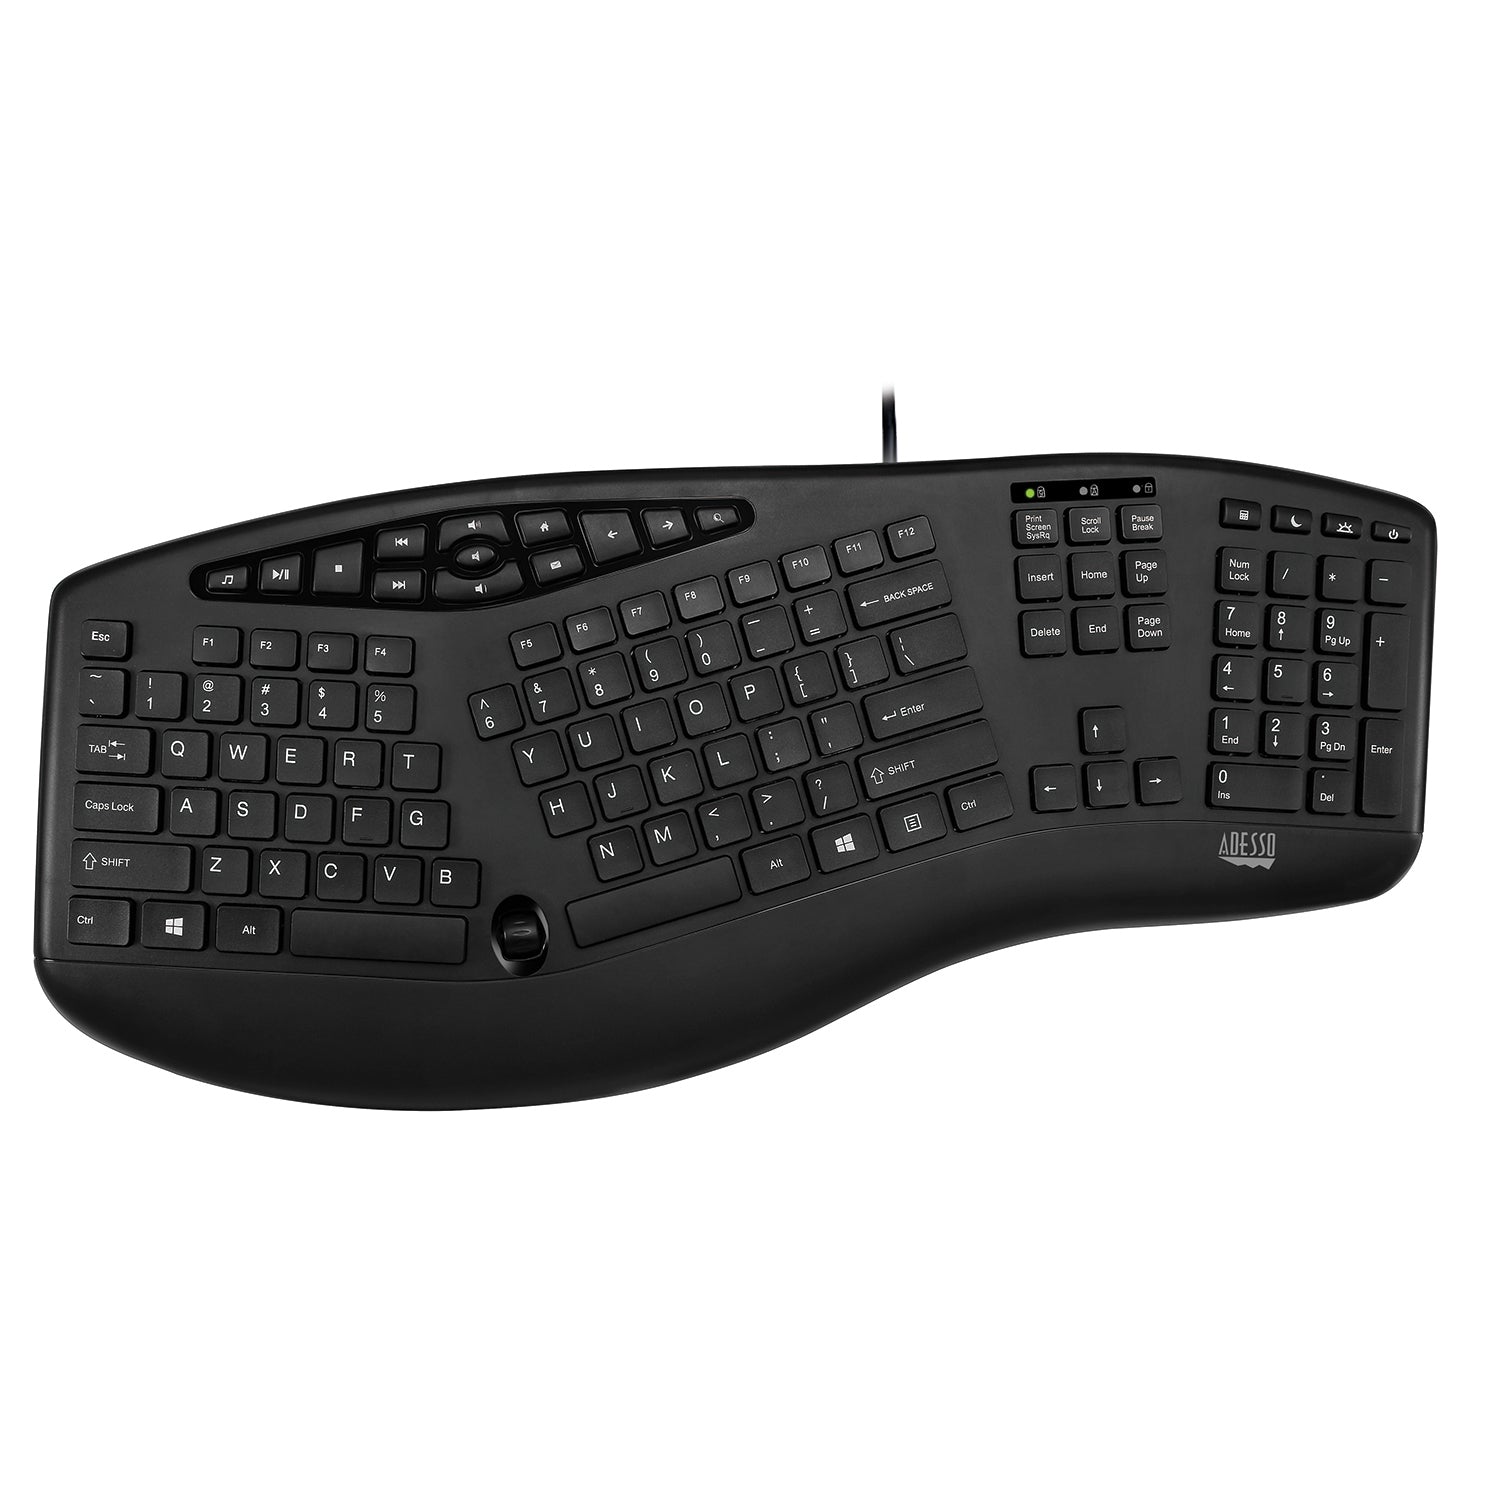 TruForm Media 160 - Ergonomic Desktop Keyboard